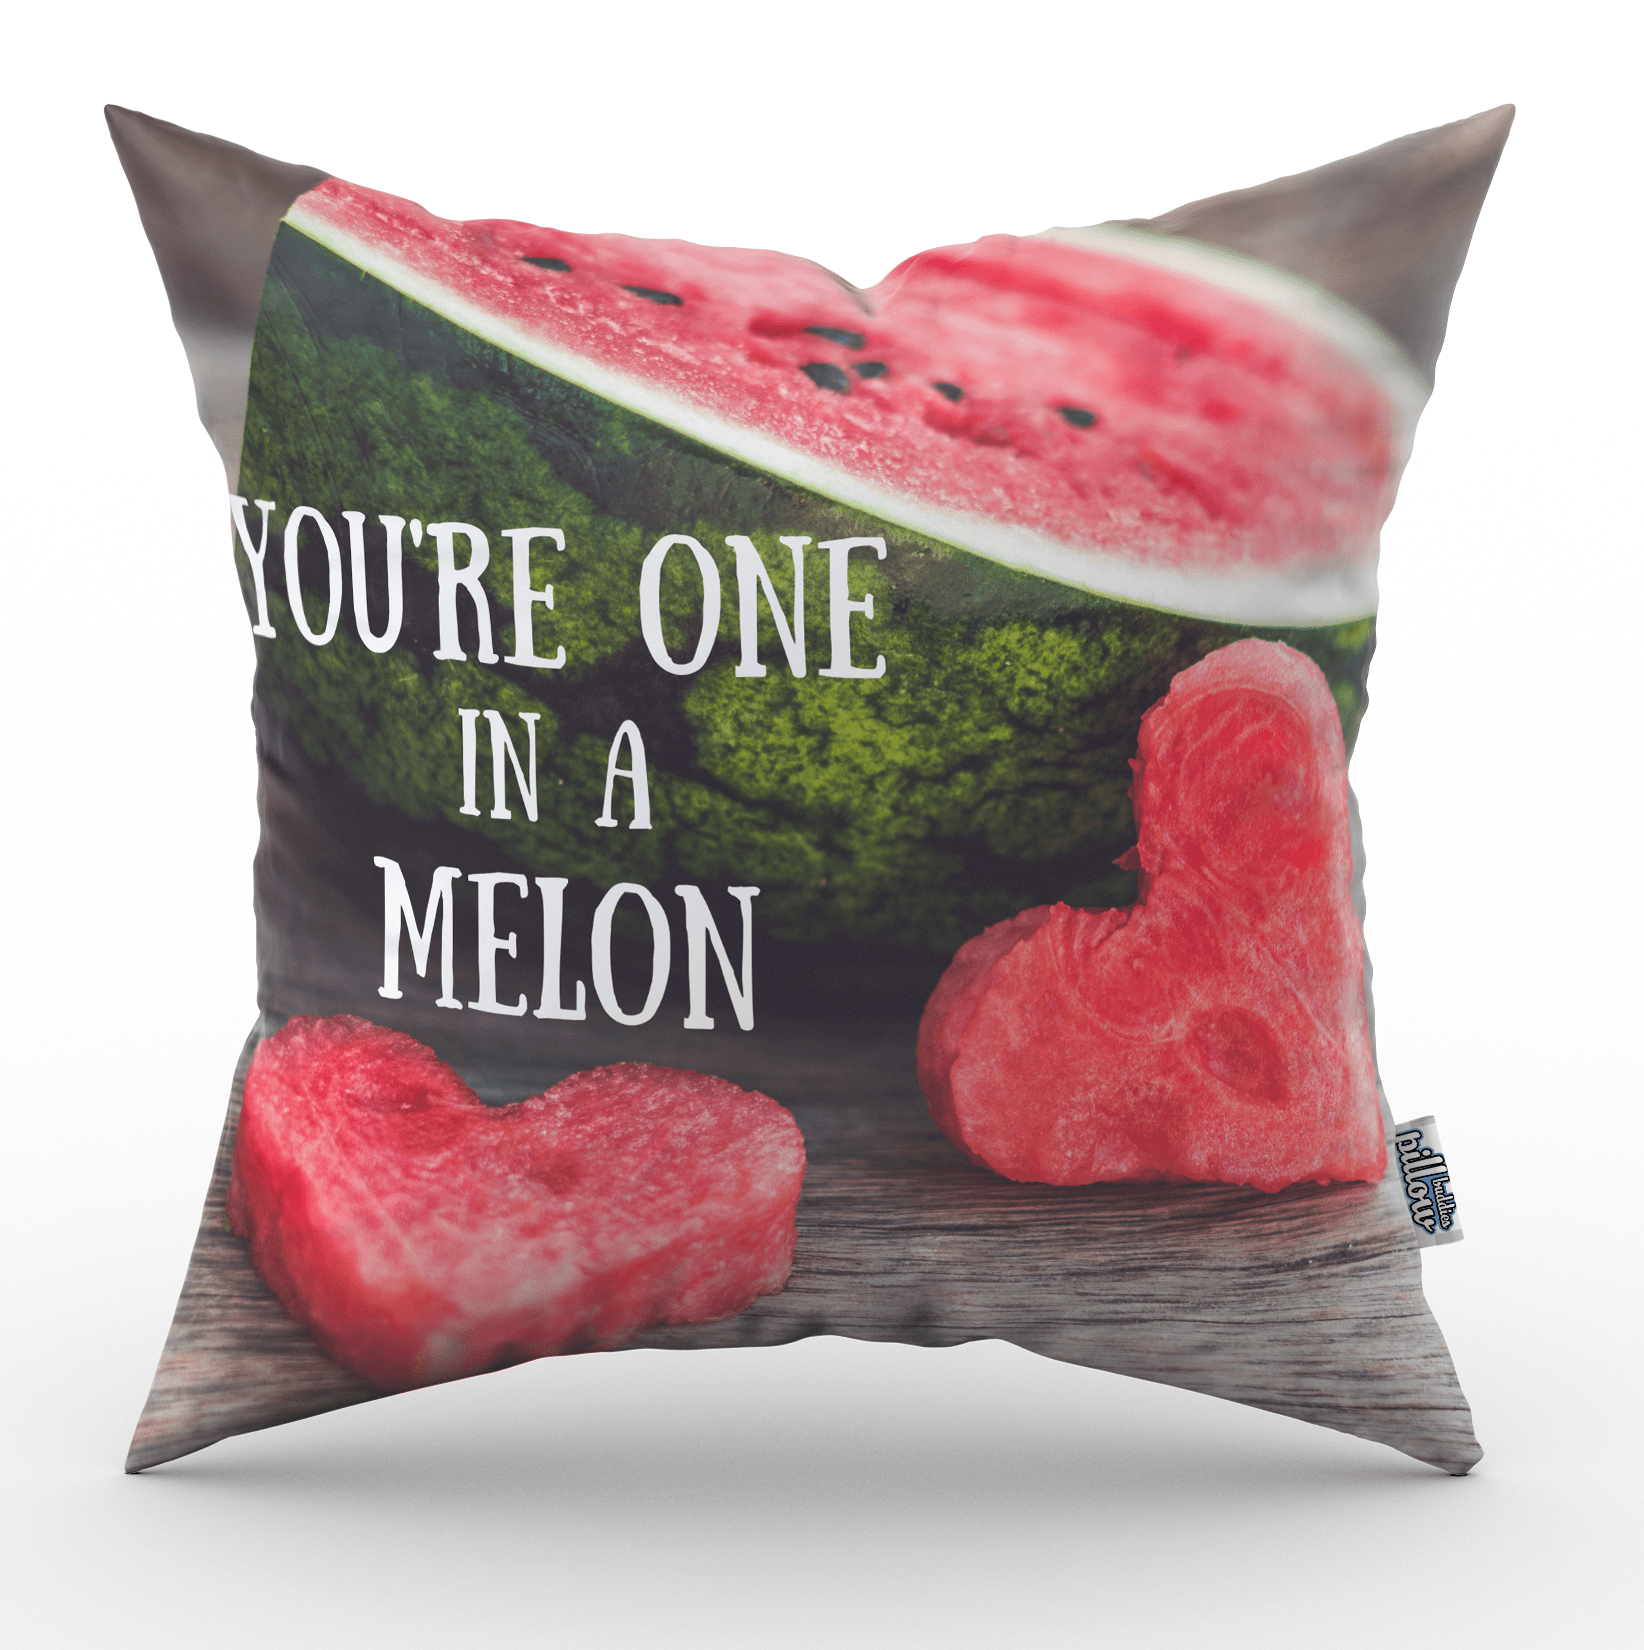 Afgekeurd Verhandeling Misverstand Valentijn kussen You're one in a melon - Pillow Buddies